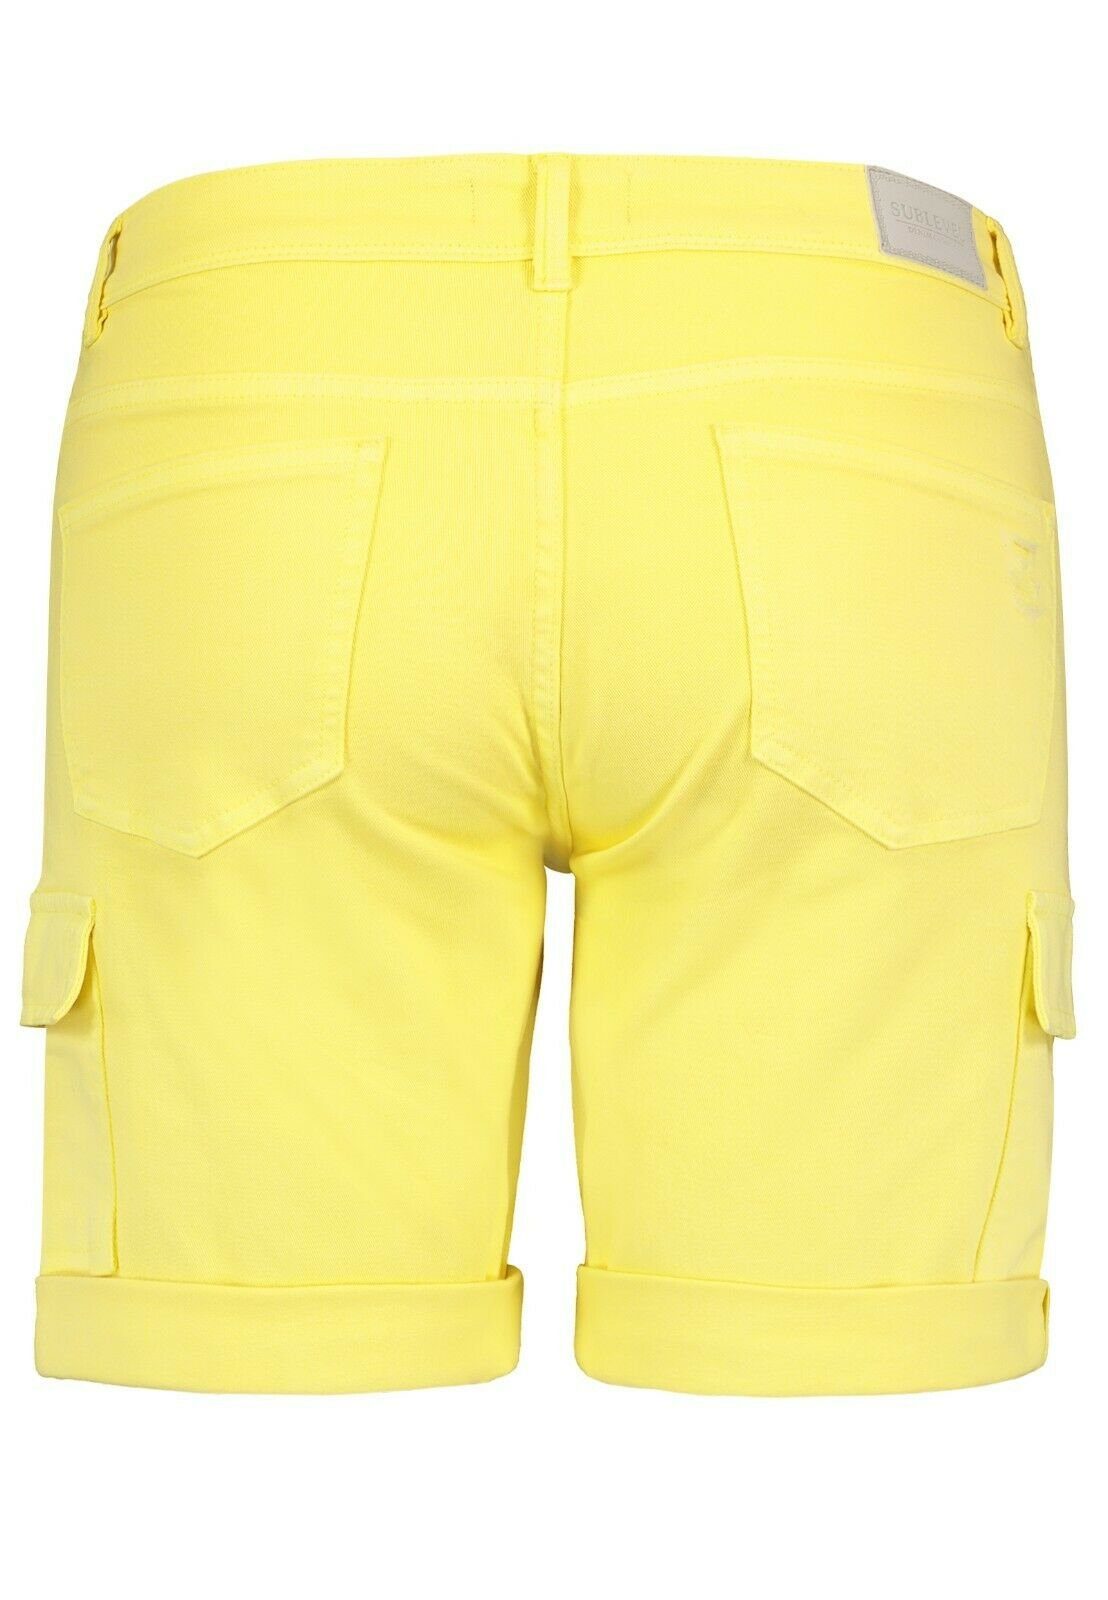 SUBLEVEL Bermudas Damen Cargo Shorts citrus Hose Bermuda Short yellow Denim Denim Stretch Kurze Shorts